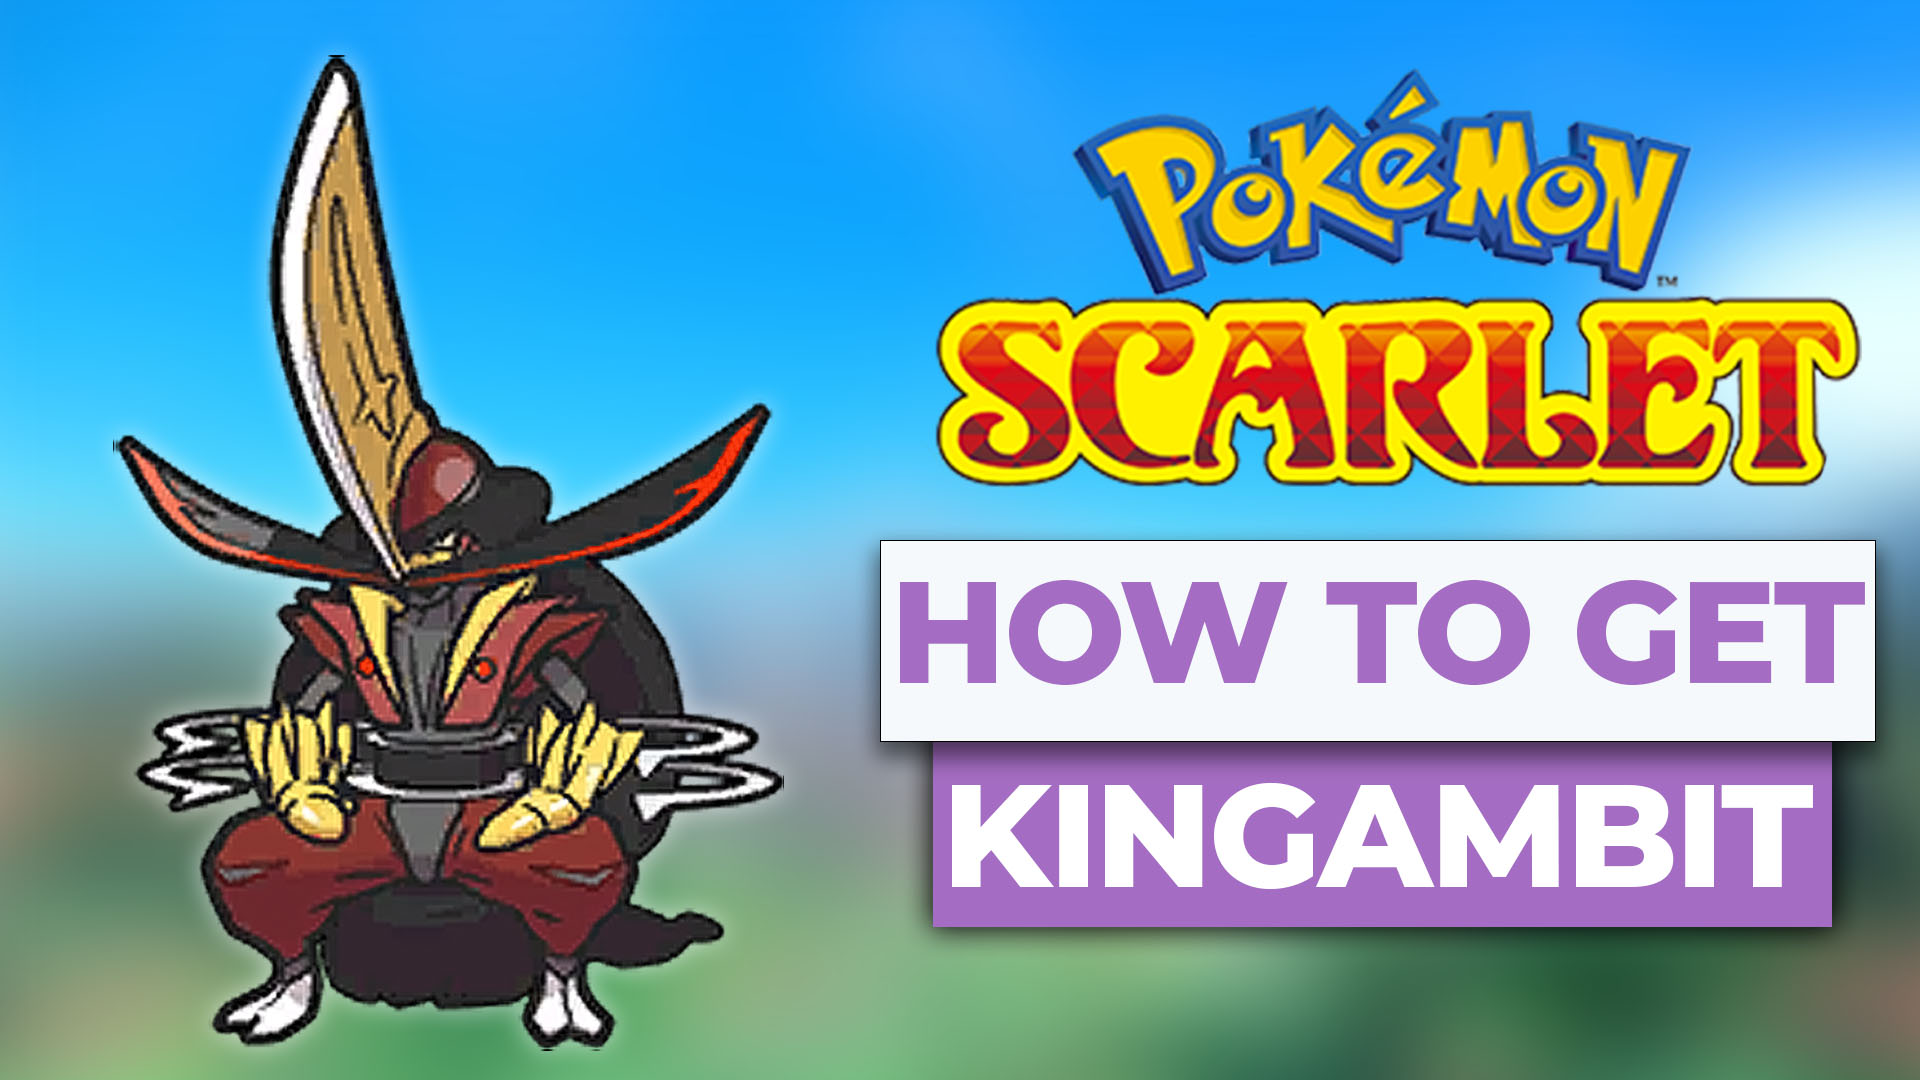 kingambit: Pokémon Scarlet and Violet: Tips to evolve your Bisharp